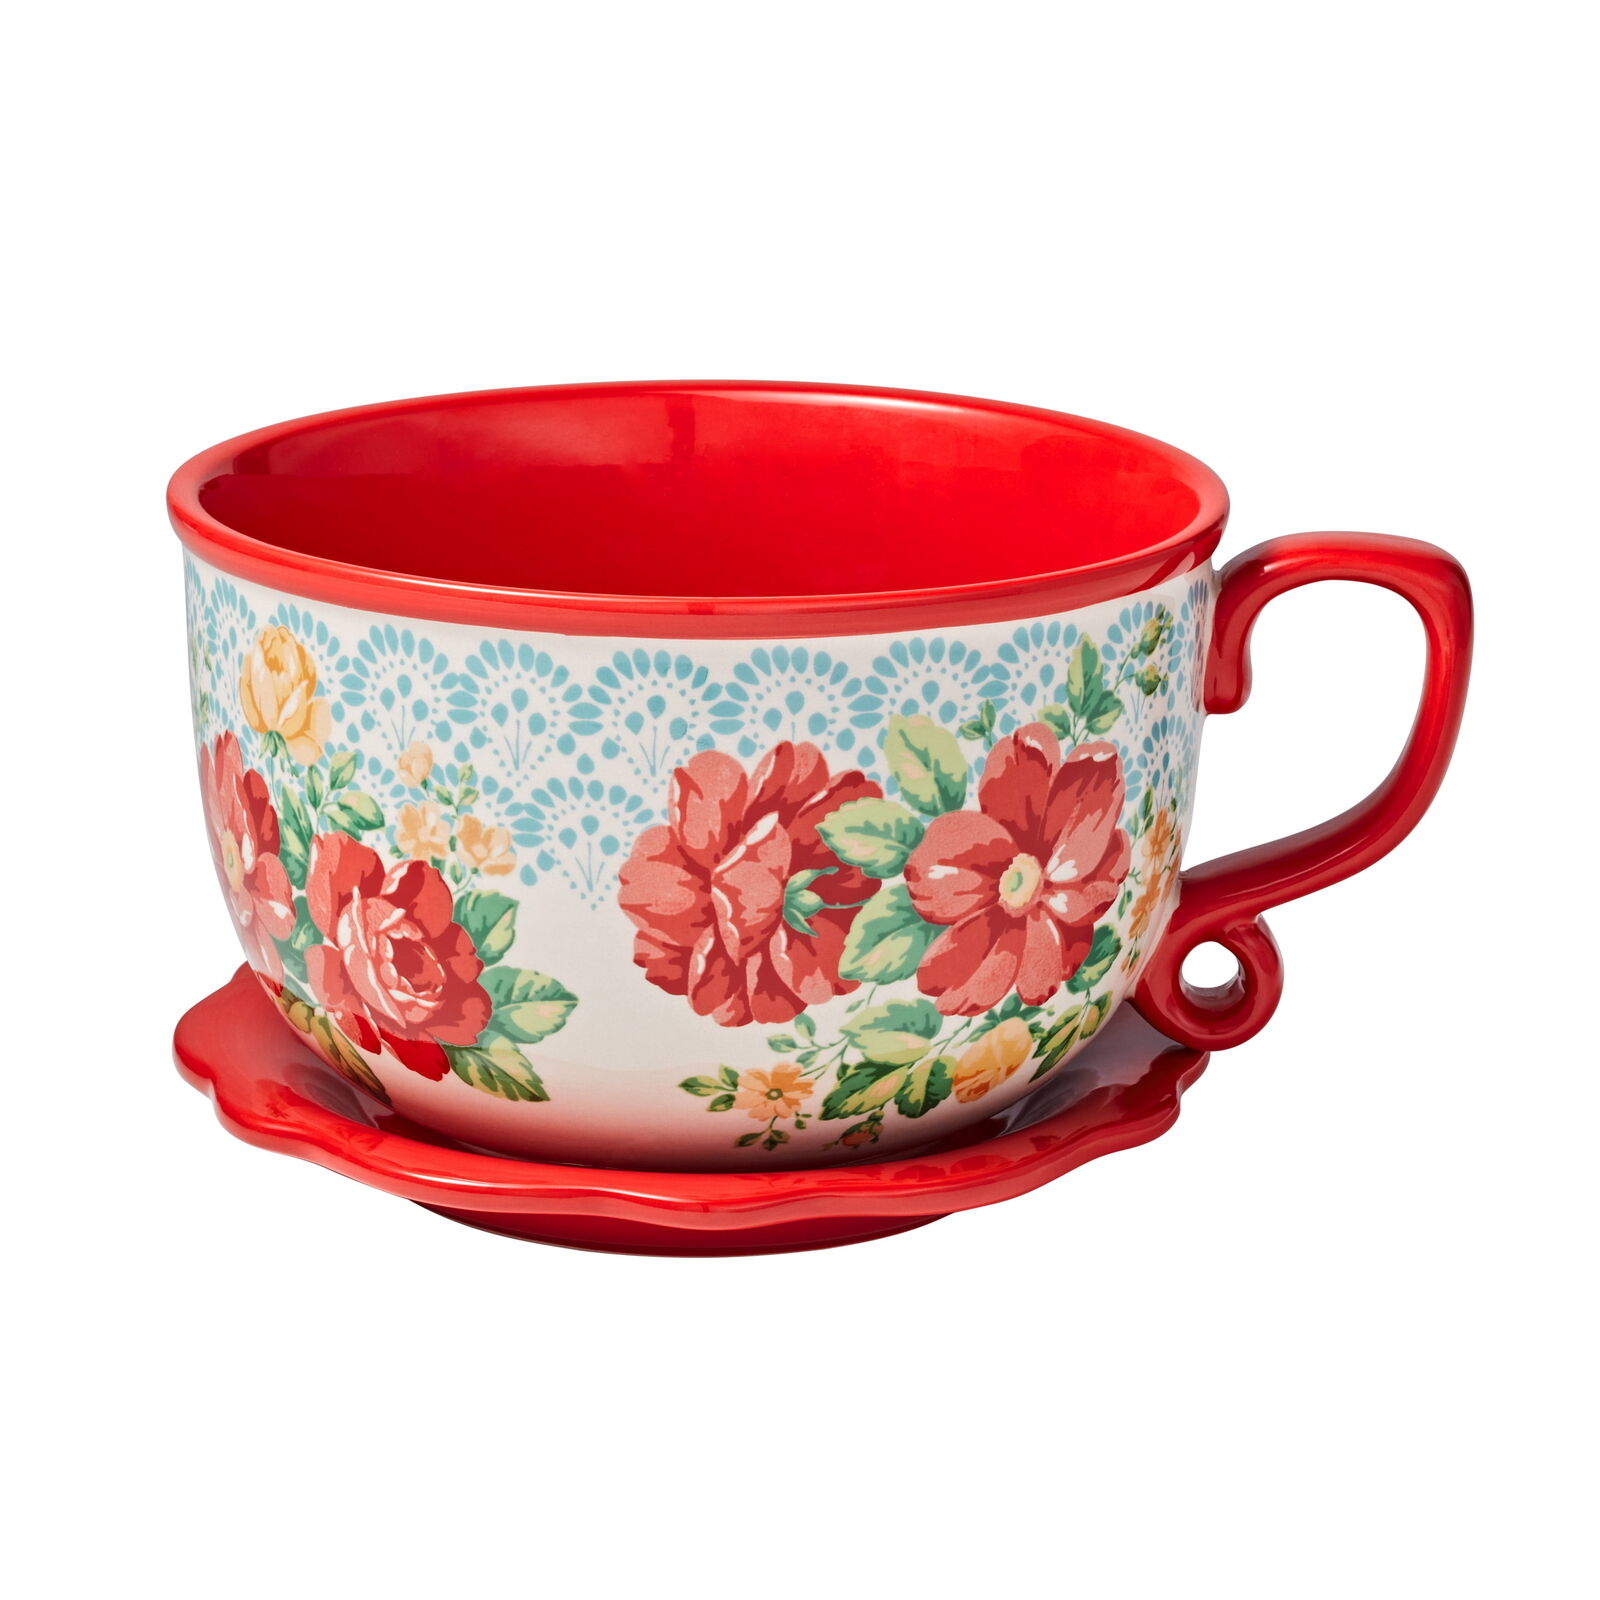 Woman Vintage Floral 8-Inch Tea Cup Ceramic Planter, Red